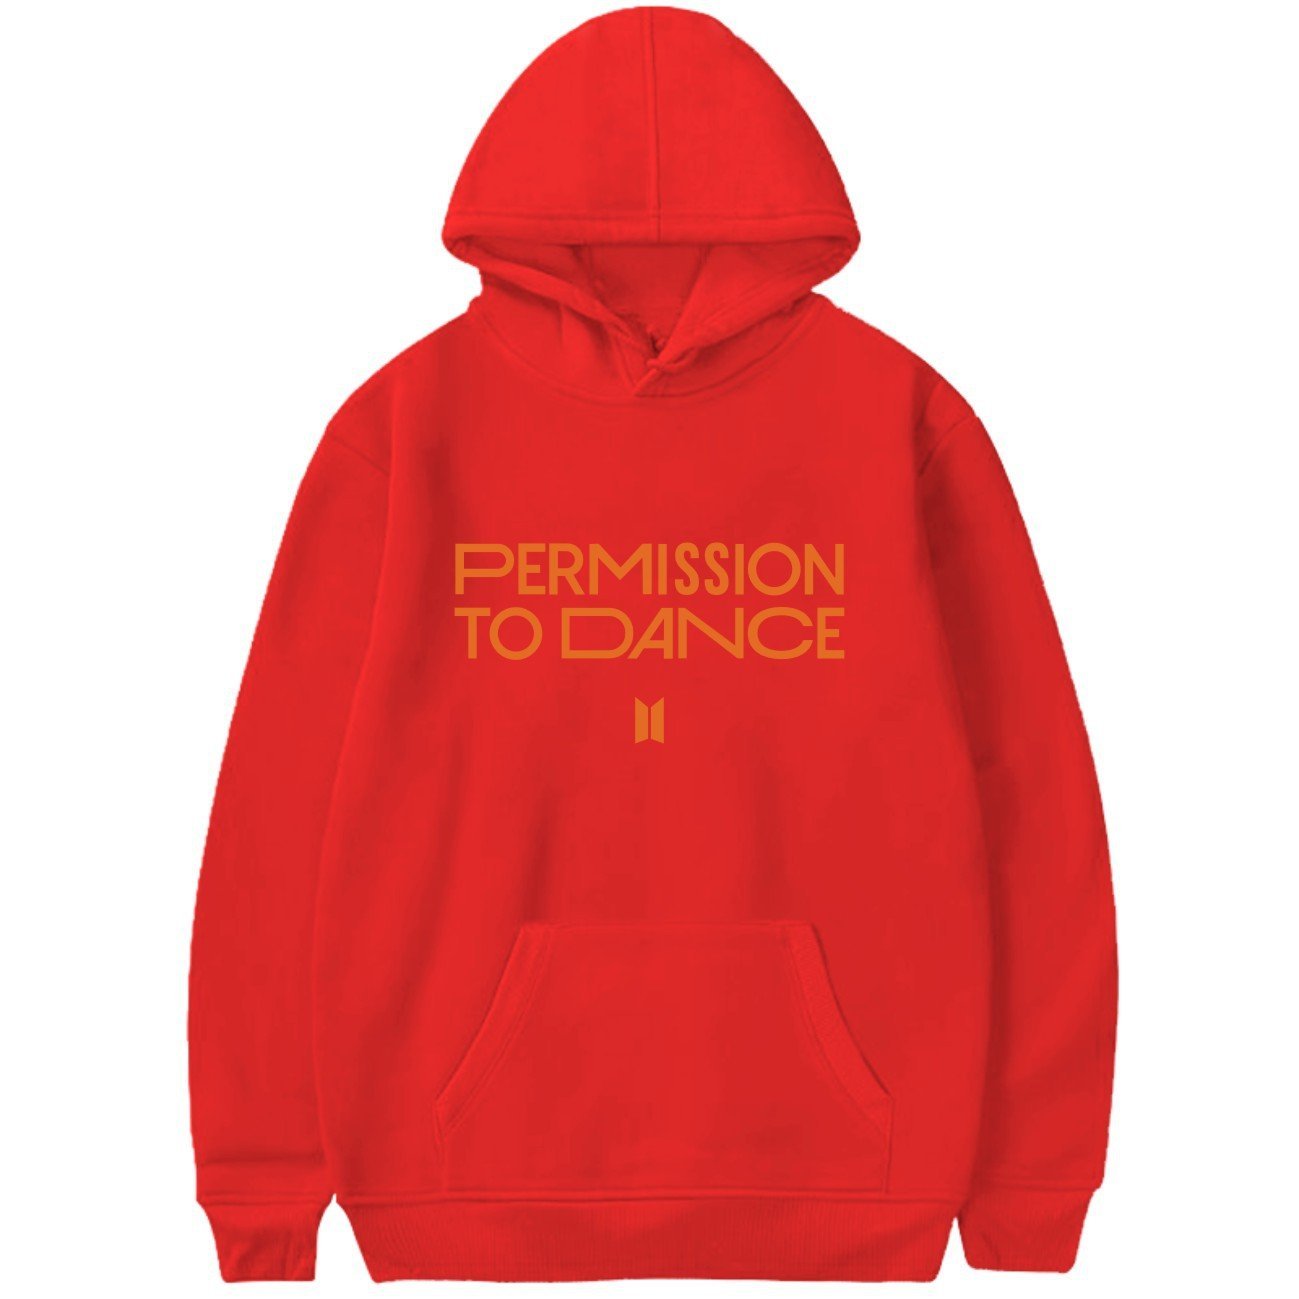 BTS PERMISSION TO DANCE HOODIE 🧡